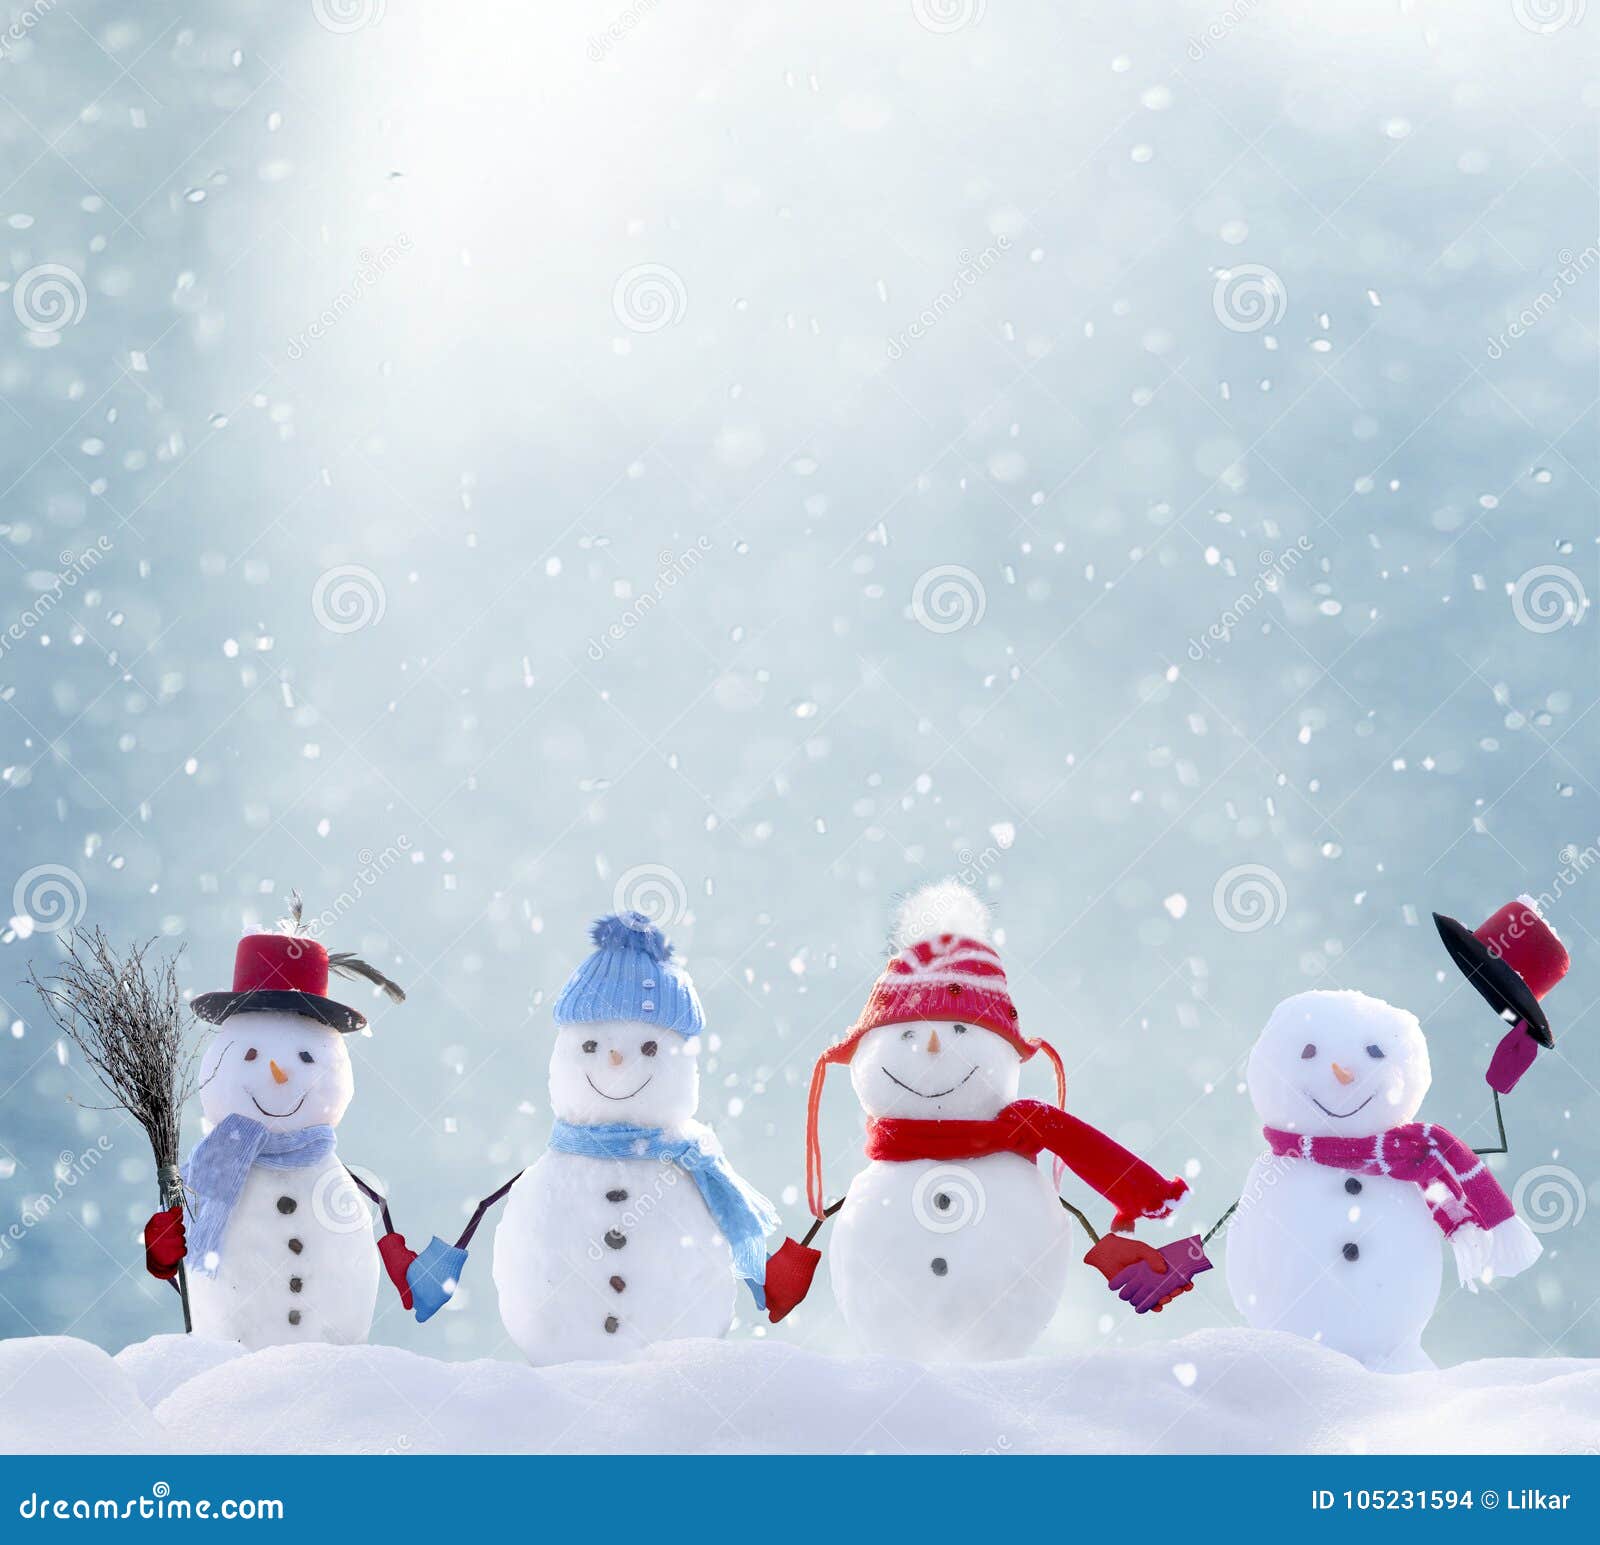 many snowmen standing in winter christmas landscape